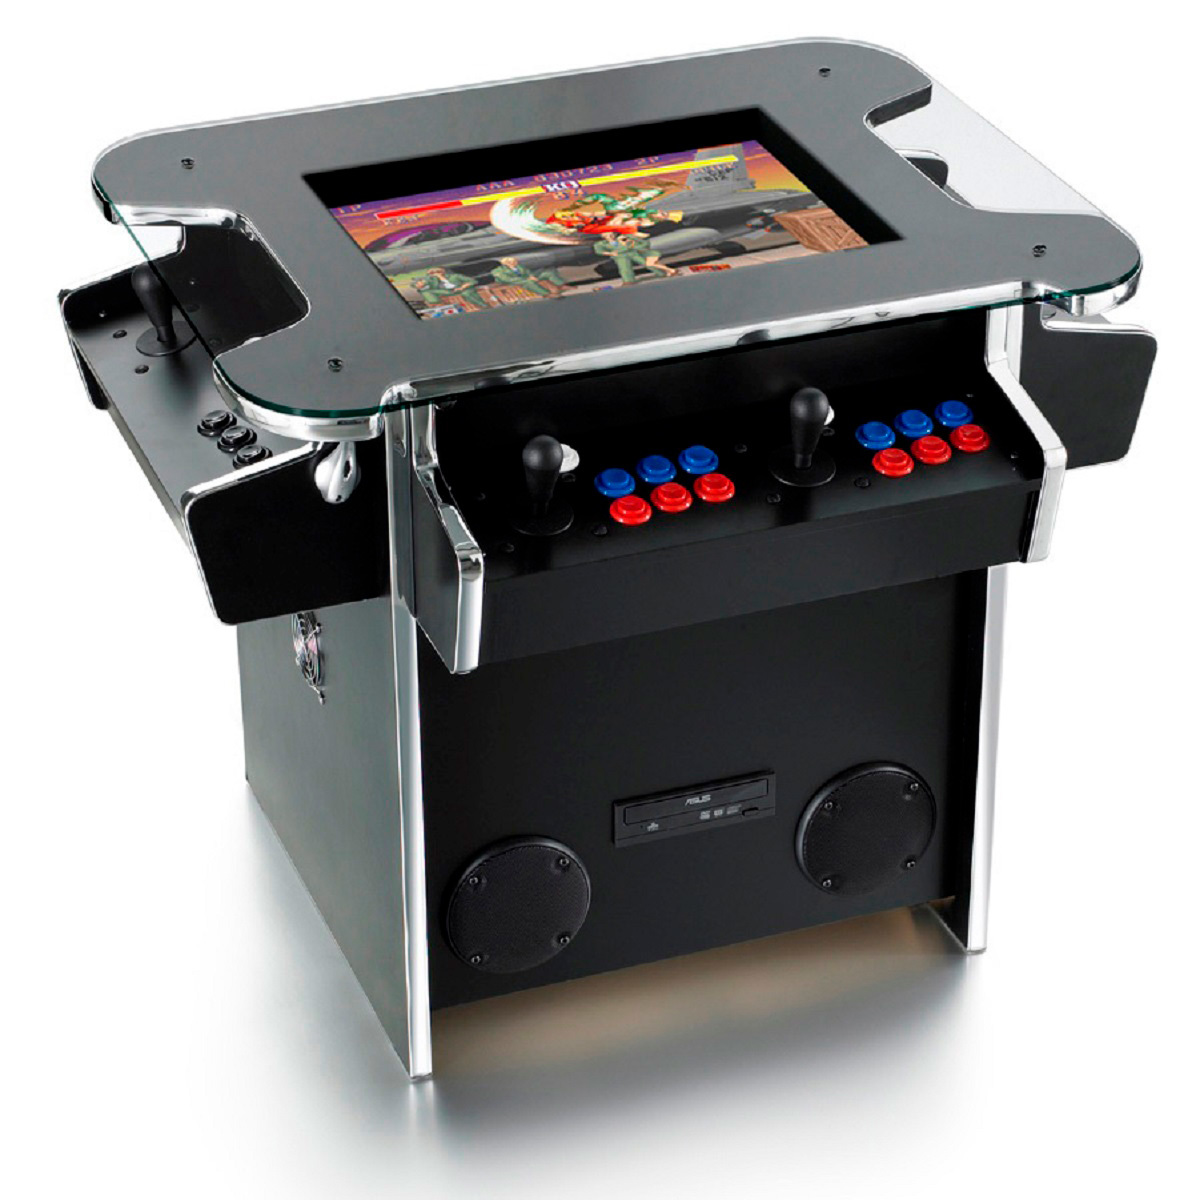 Arcade Overload Tabletop Arcade Machine - Standard Edition